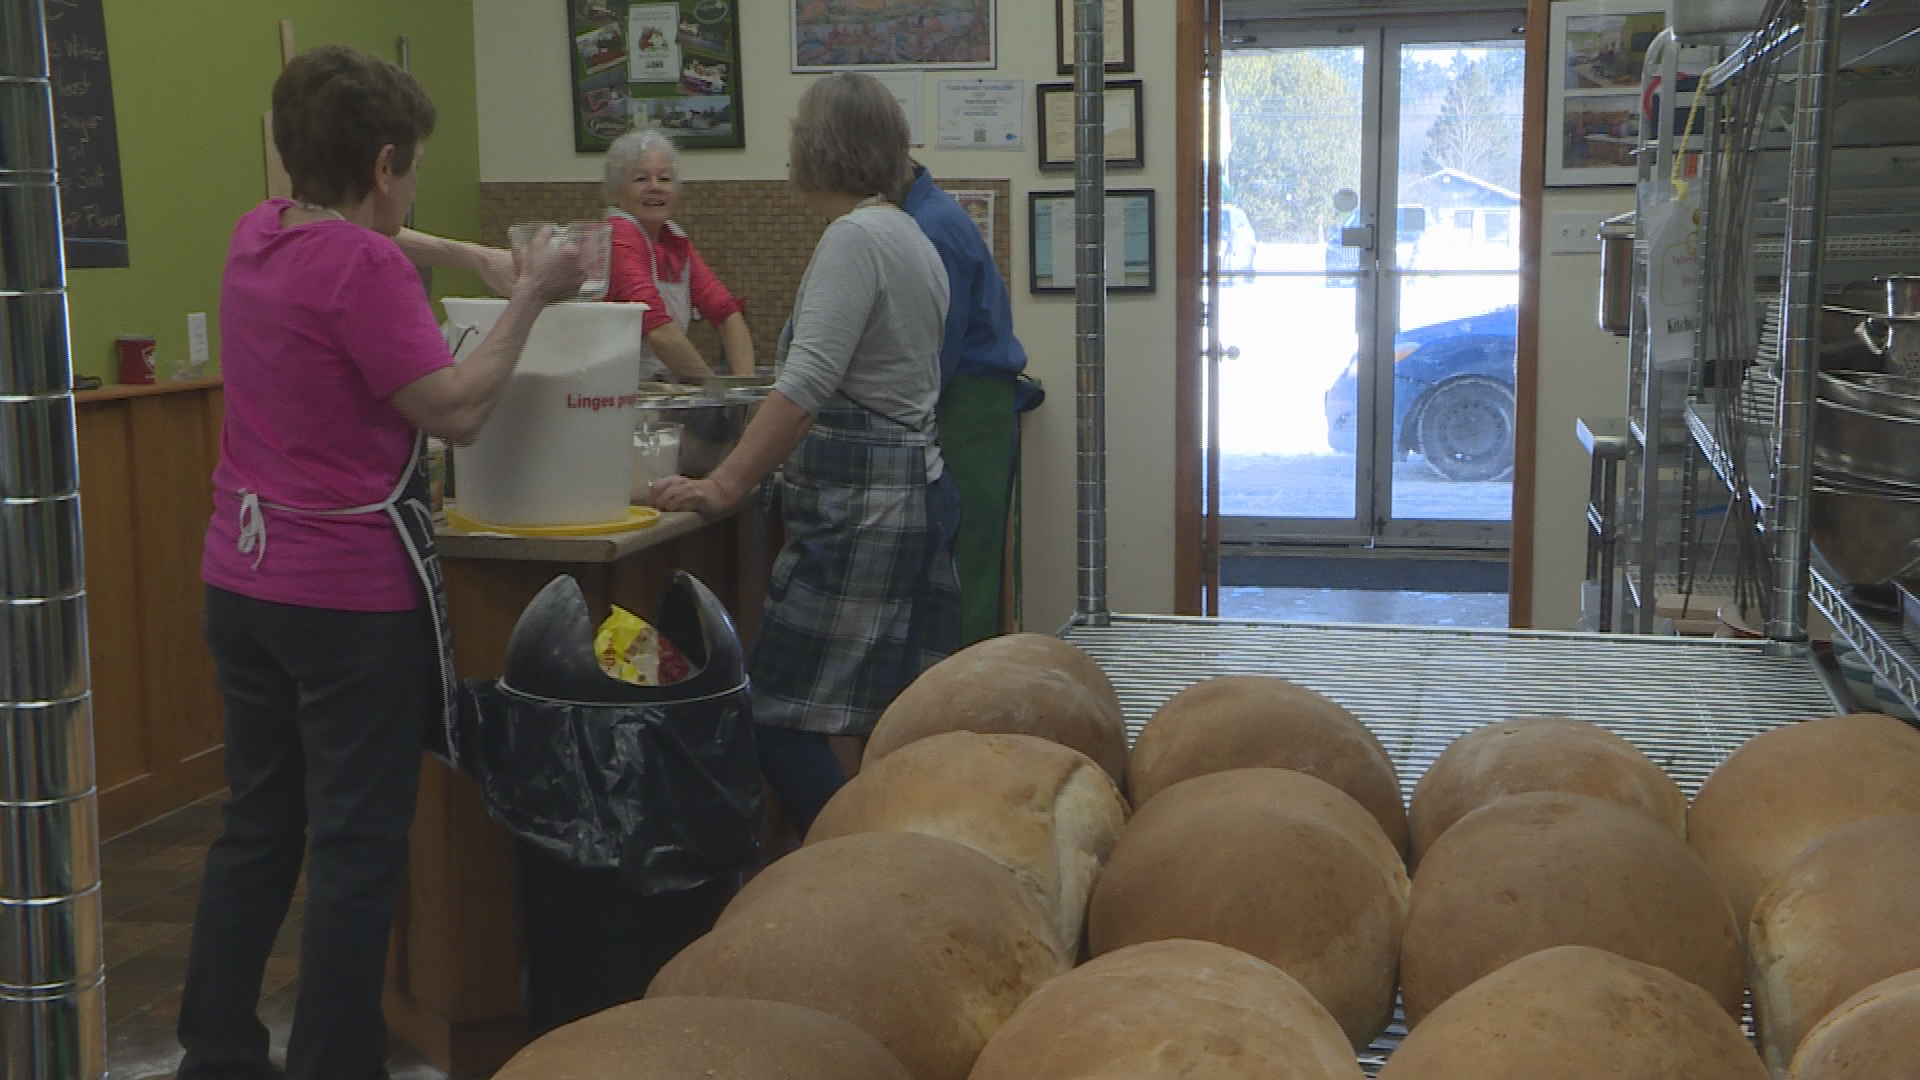 Breadmaking classes help feed New Brunswick community, build friendships